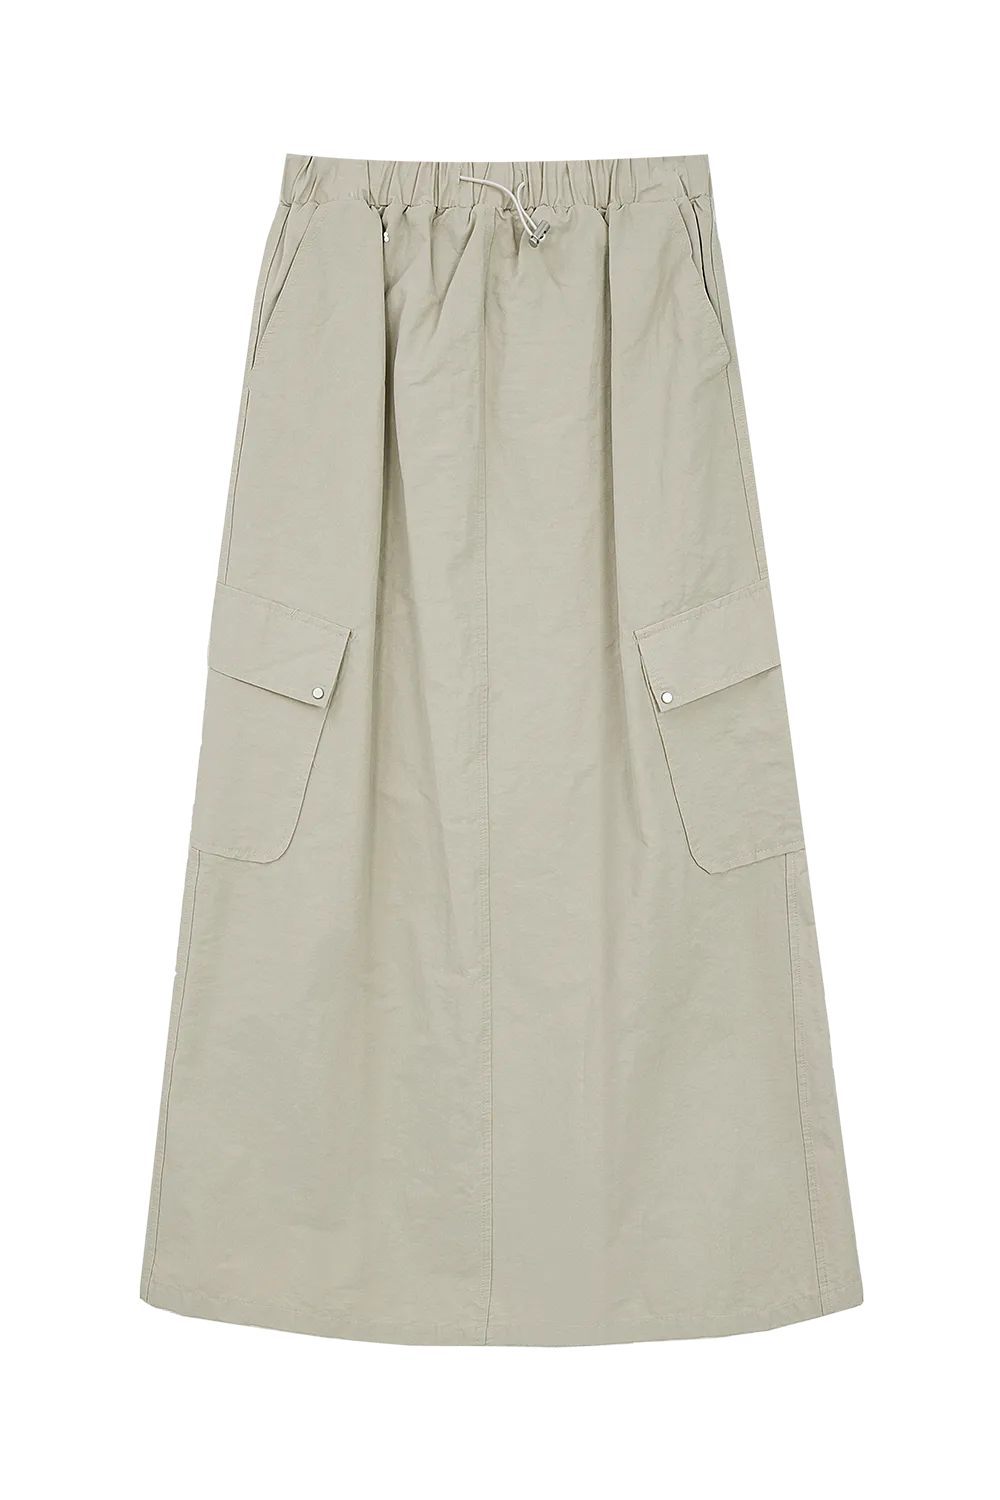 Skirt Midi Berinspirasikan Utiliti dengan Pinggang Bertali dan Poket Besar